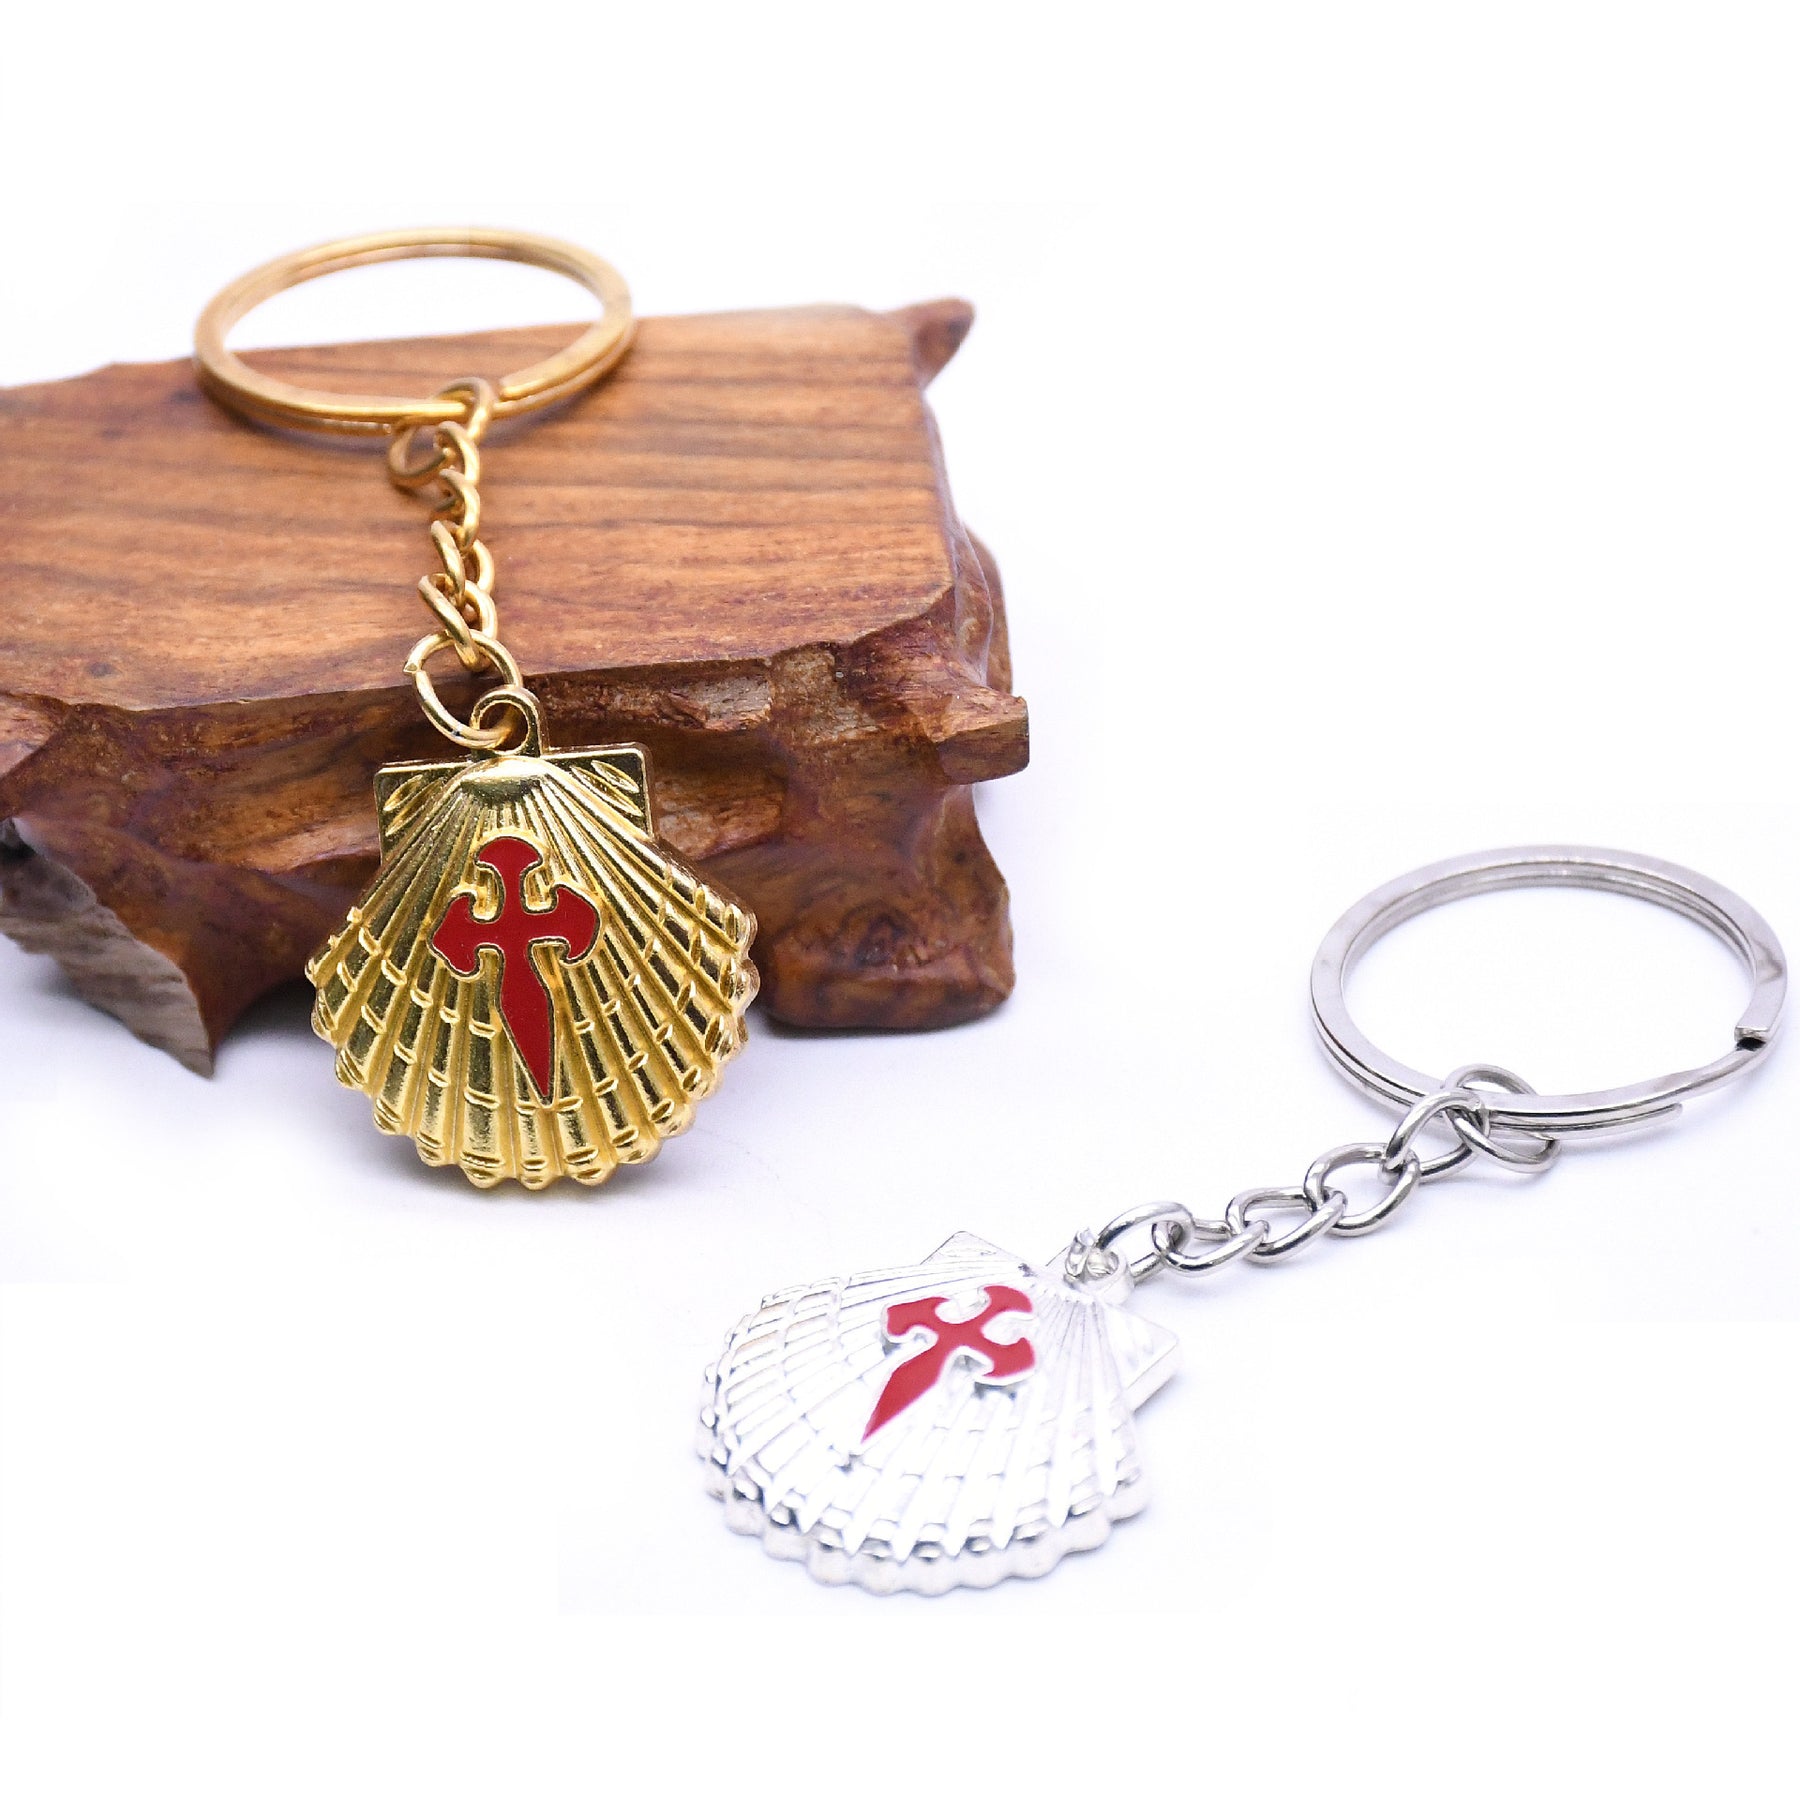 Knights Templar Commandery Keychain - Silver Cross Shell Cross Pendant - Bricks Masons